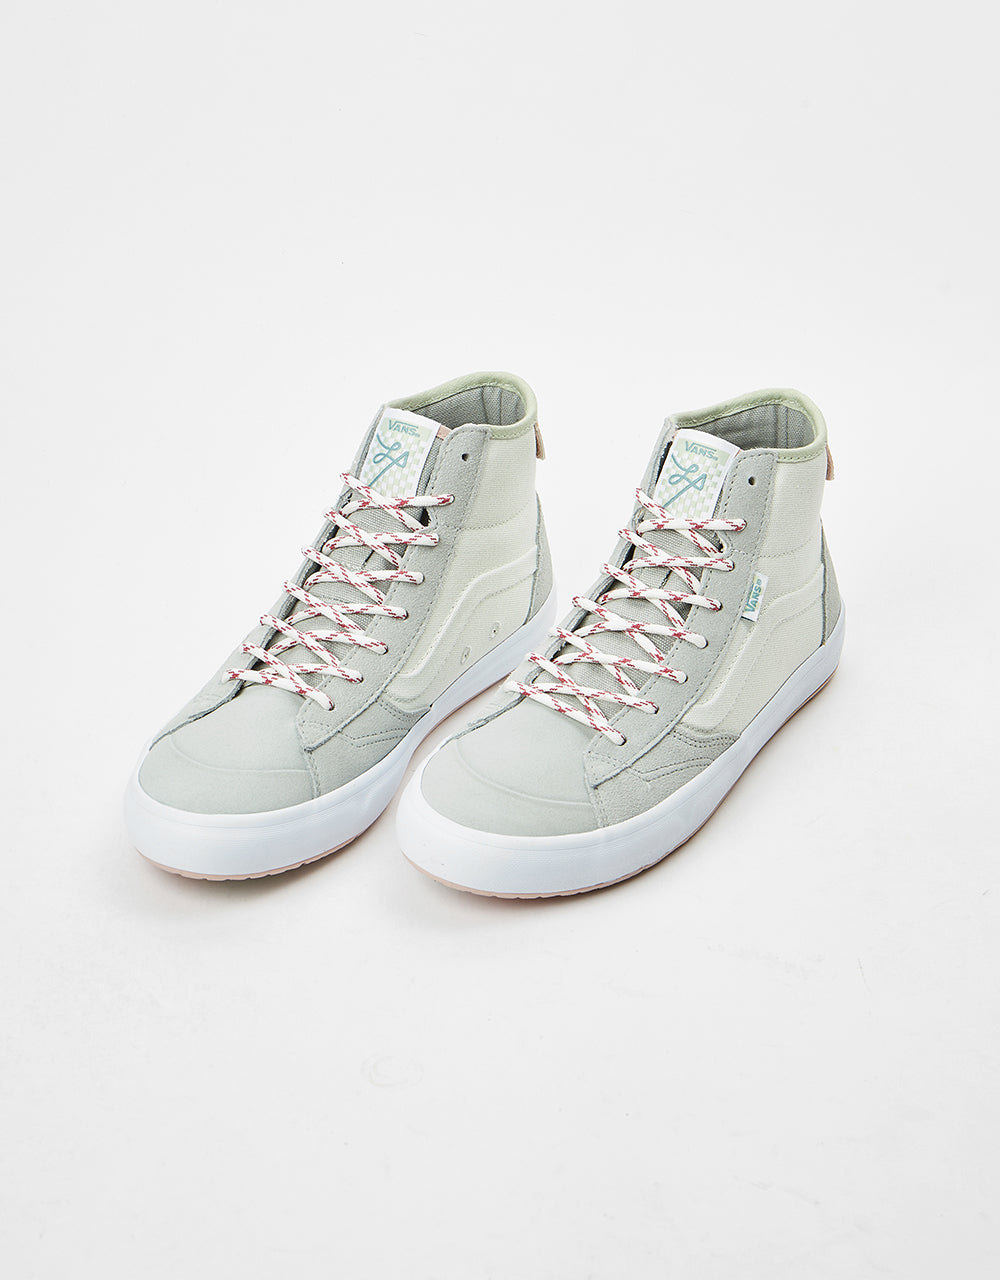 Vans The Lizzie Skate Shoes - Light Grey/Multi